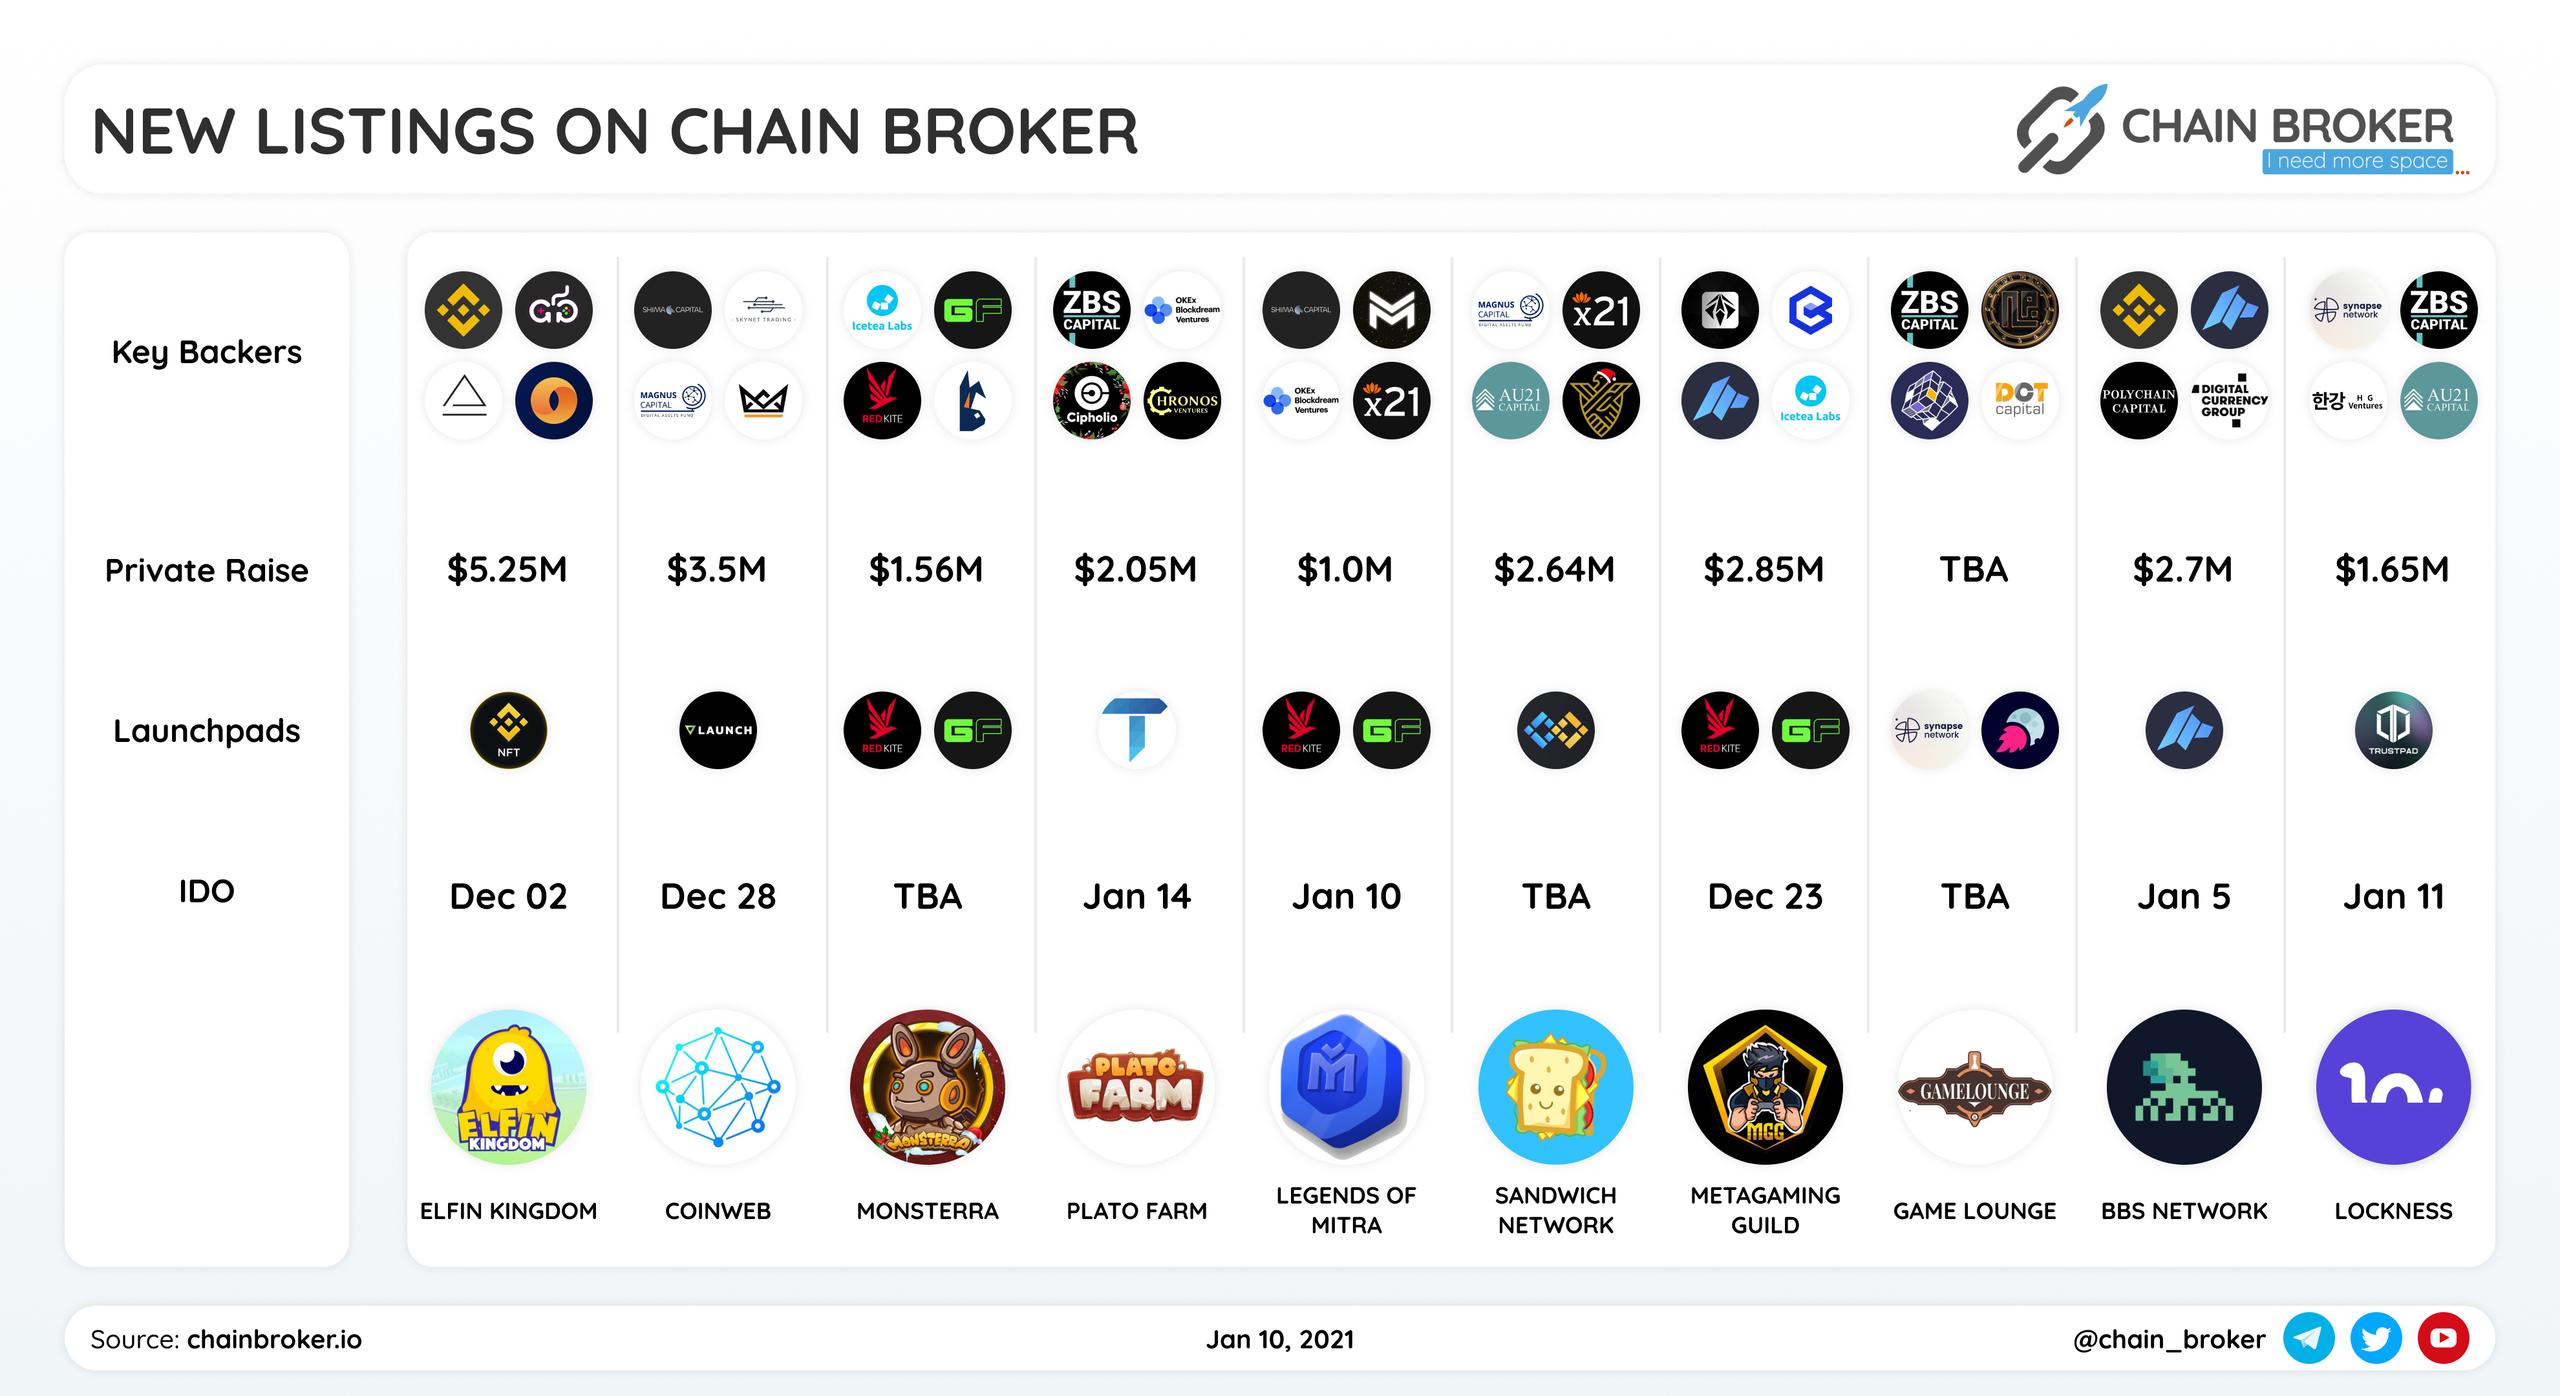 New listings on Chain Broker